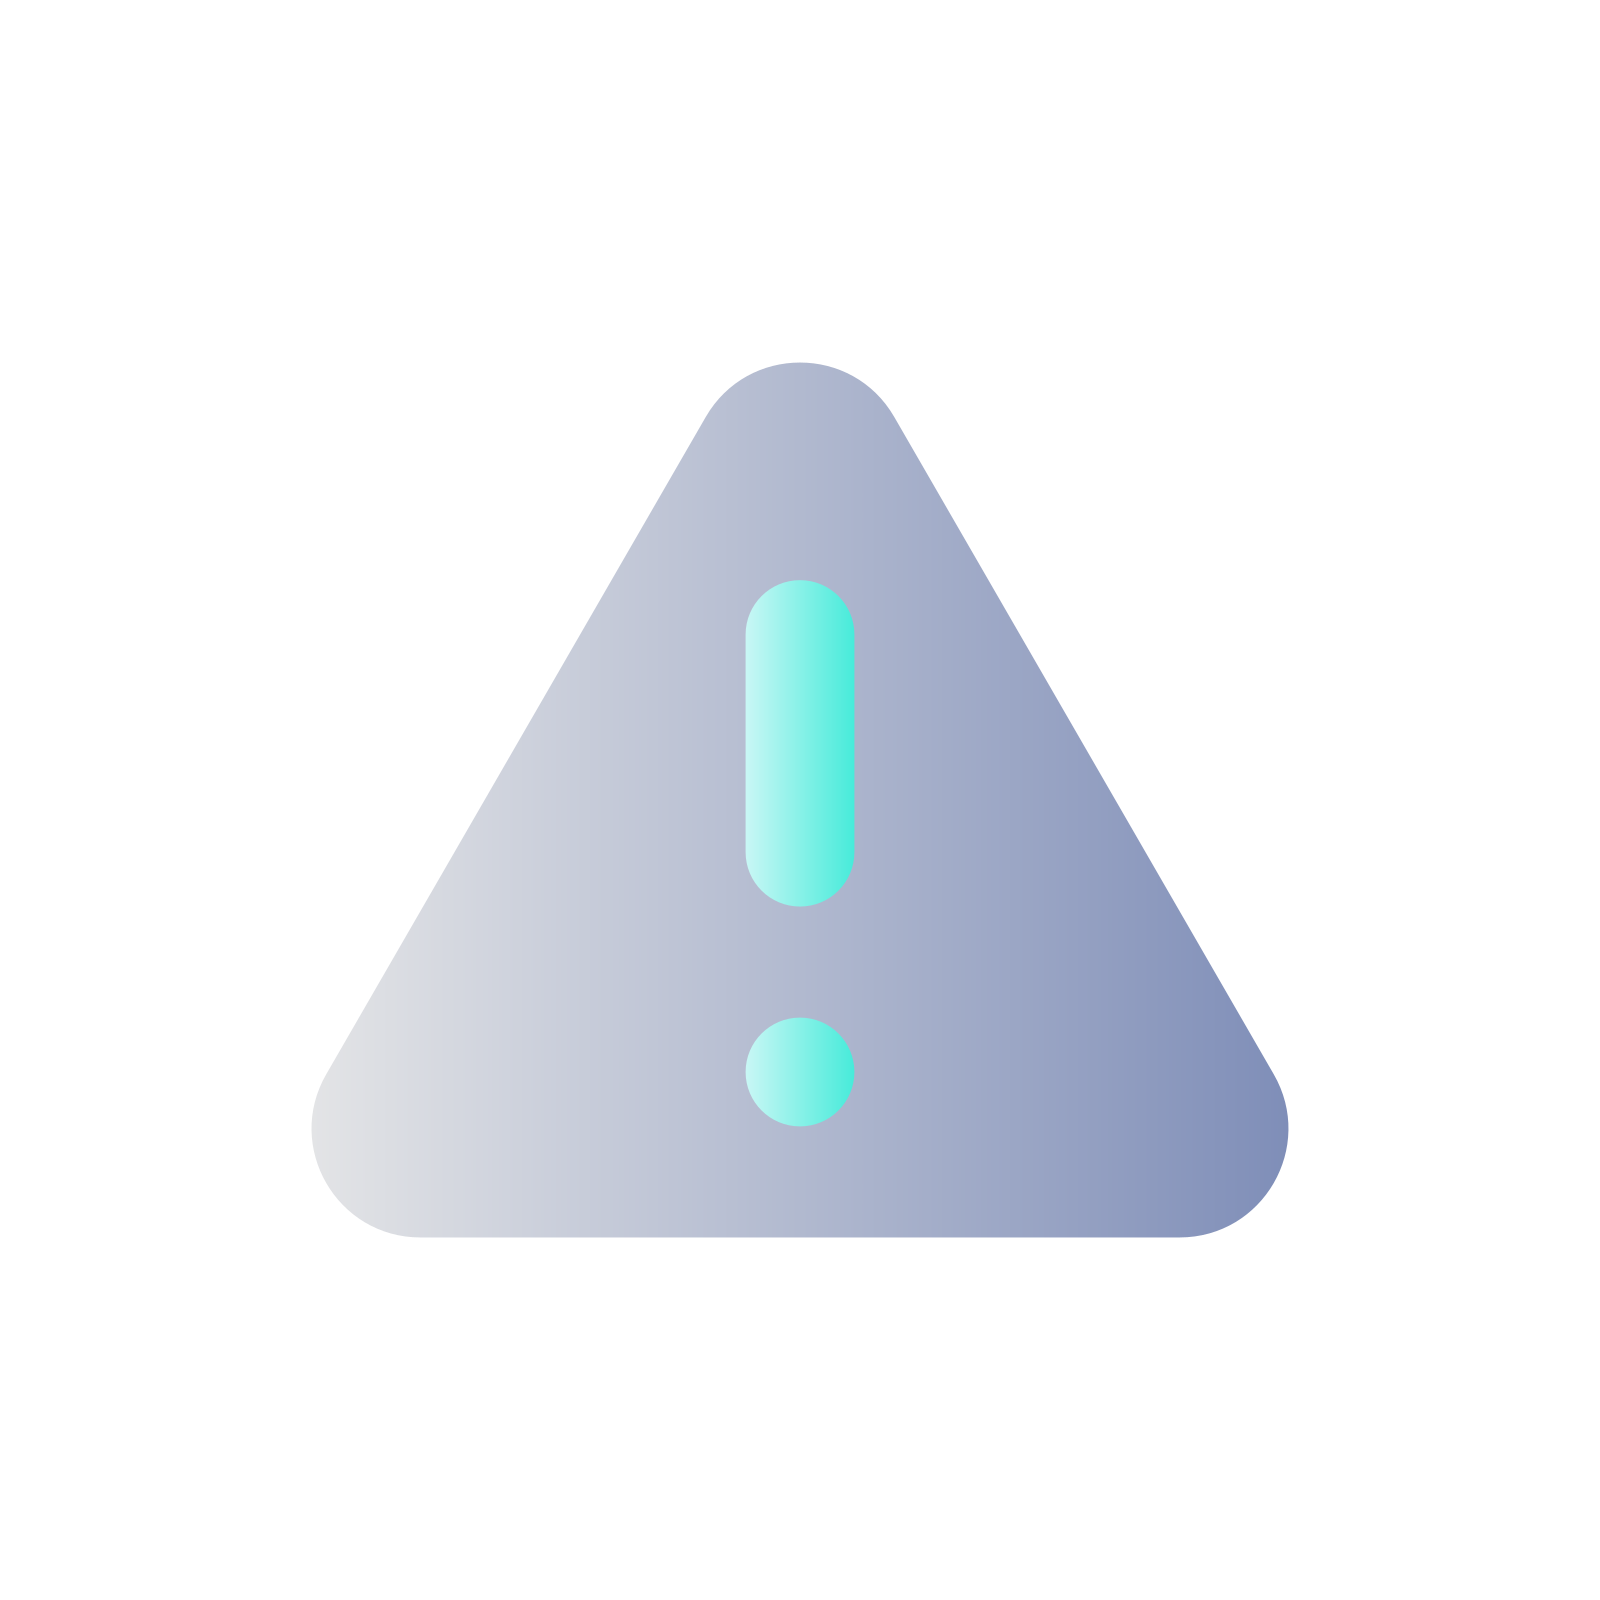 Triangle Shaped Caution icon